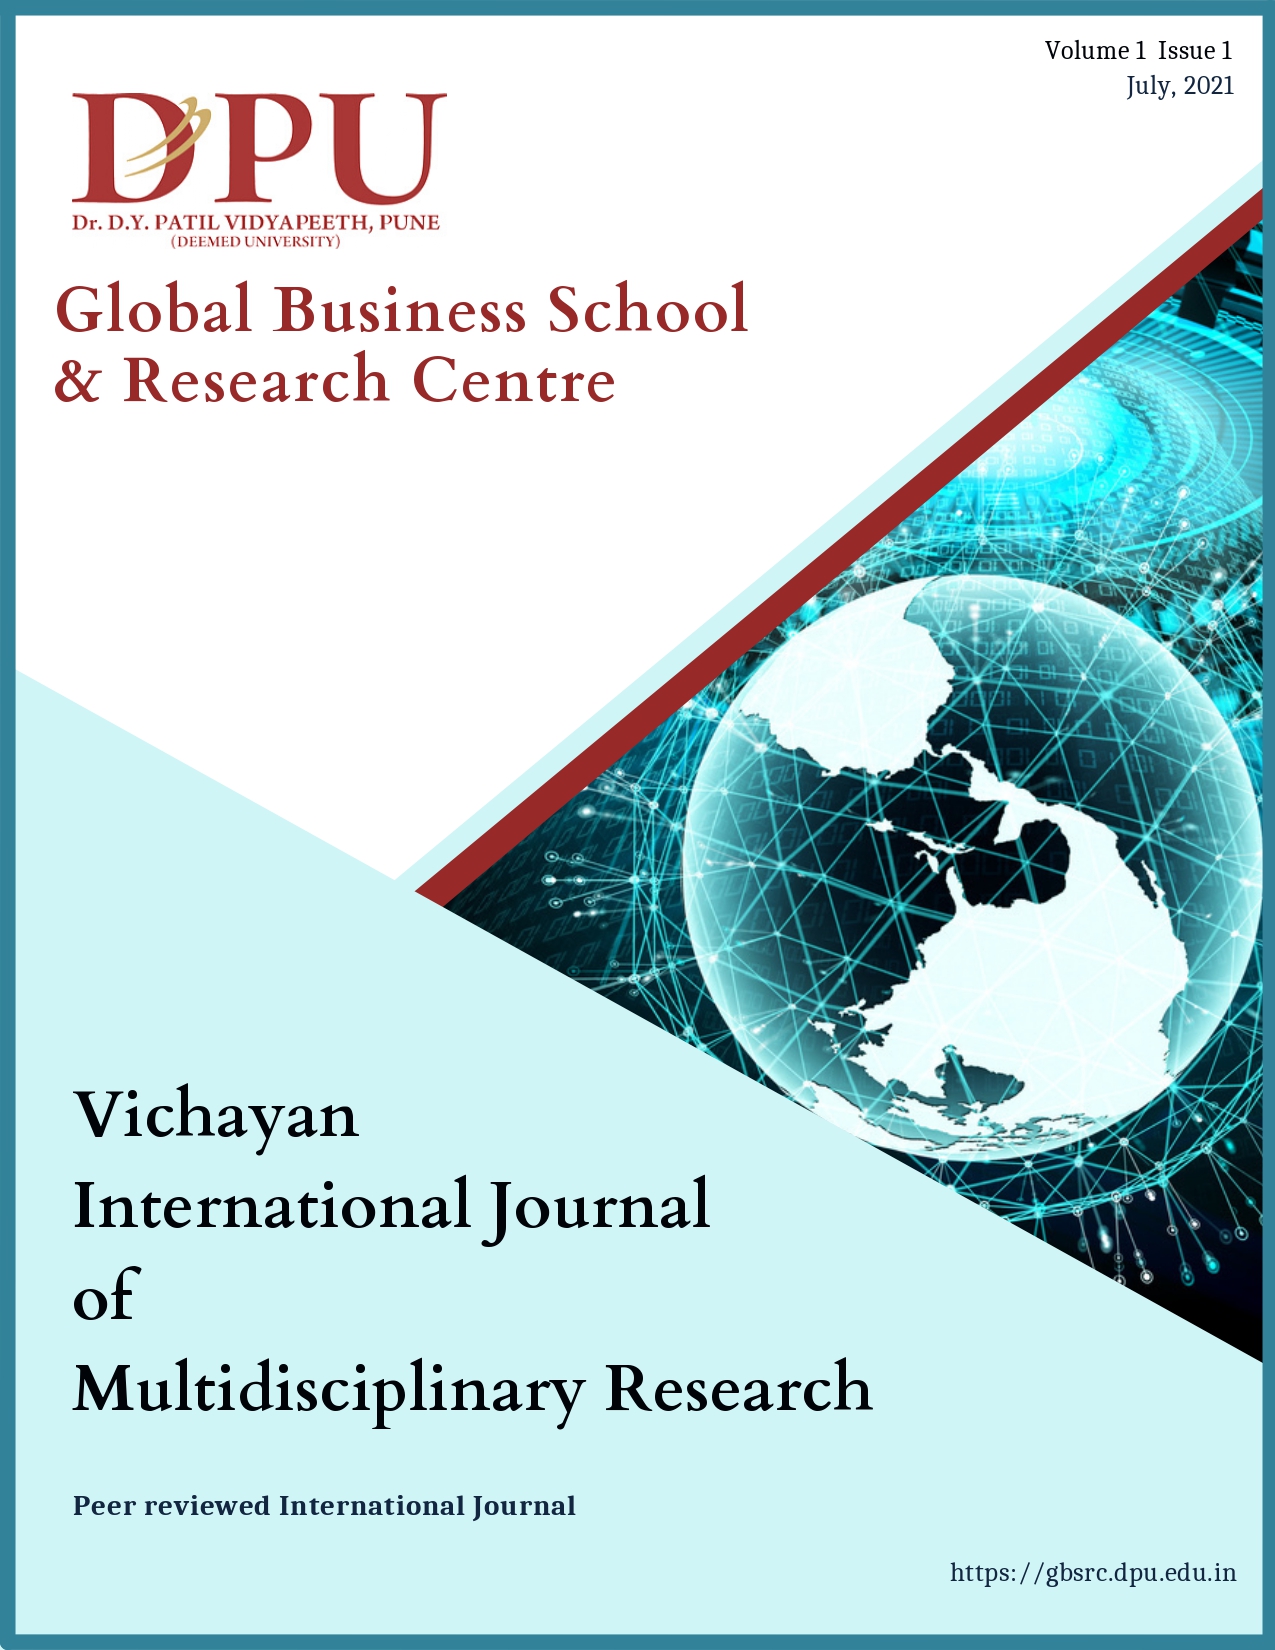 VICHAYAN- International Journal of Multidisciplinary Research